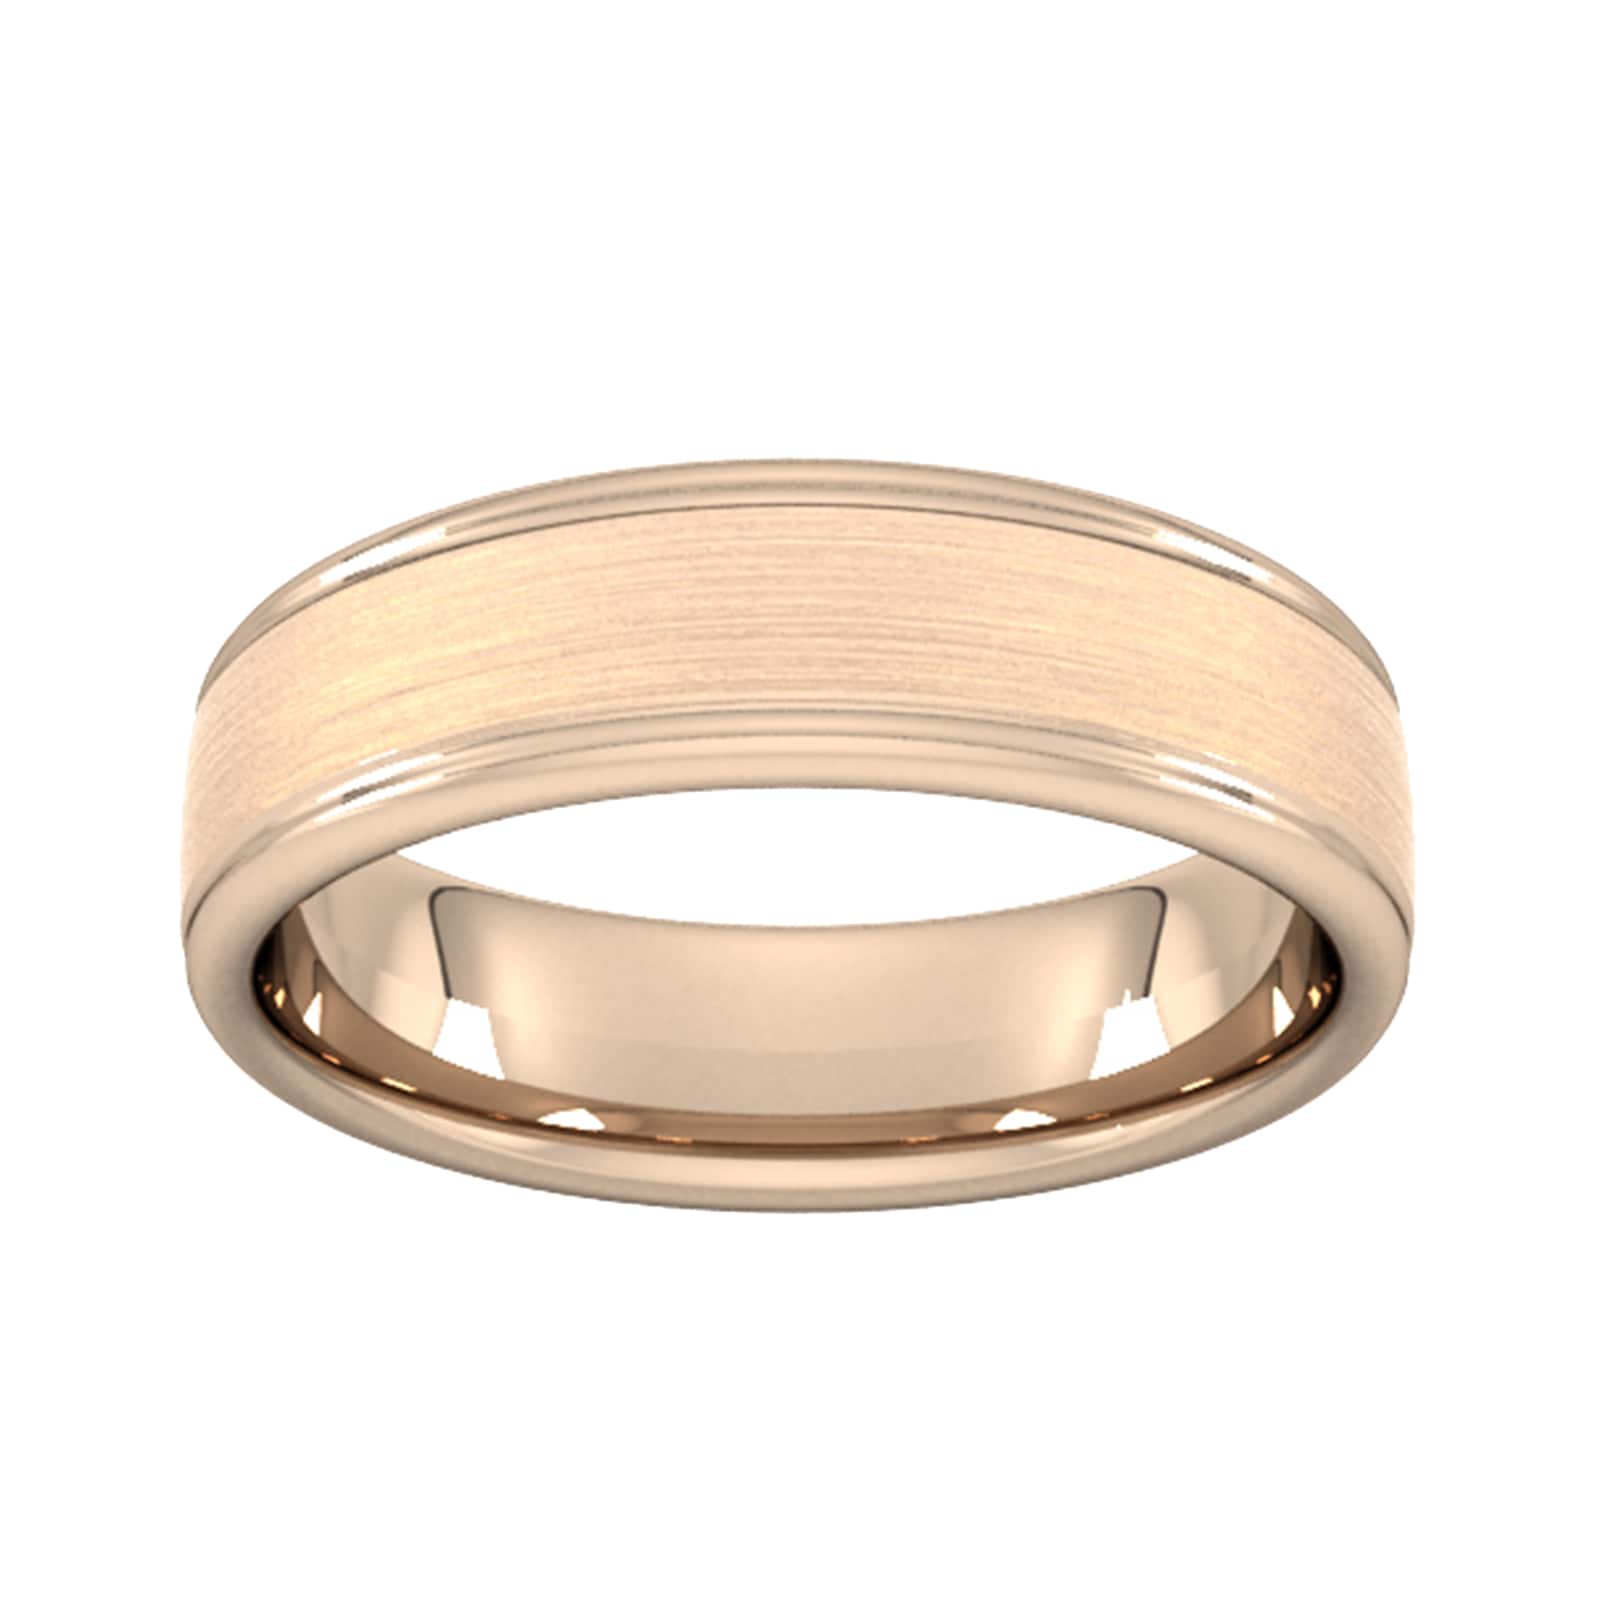 5mm D Shape Standard Matt Centre With Grooves Wedding Ring In 9 Carat Rose Gold - Ring Size K